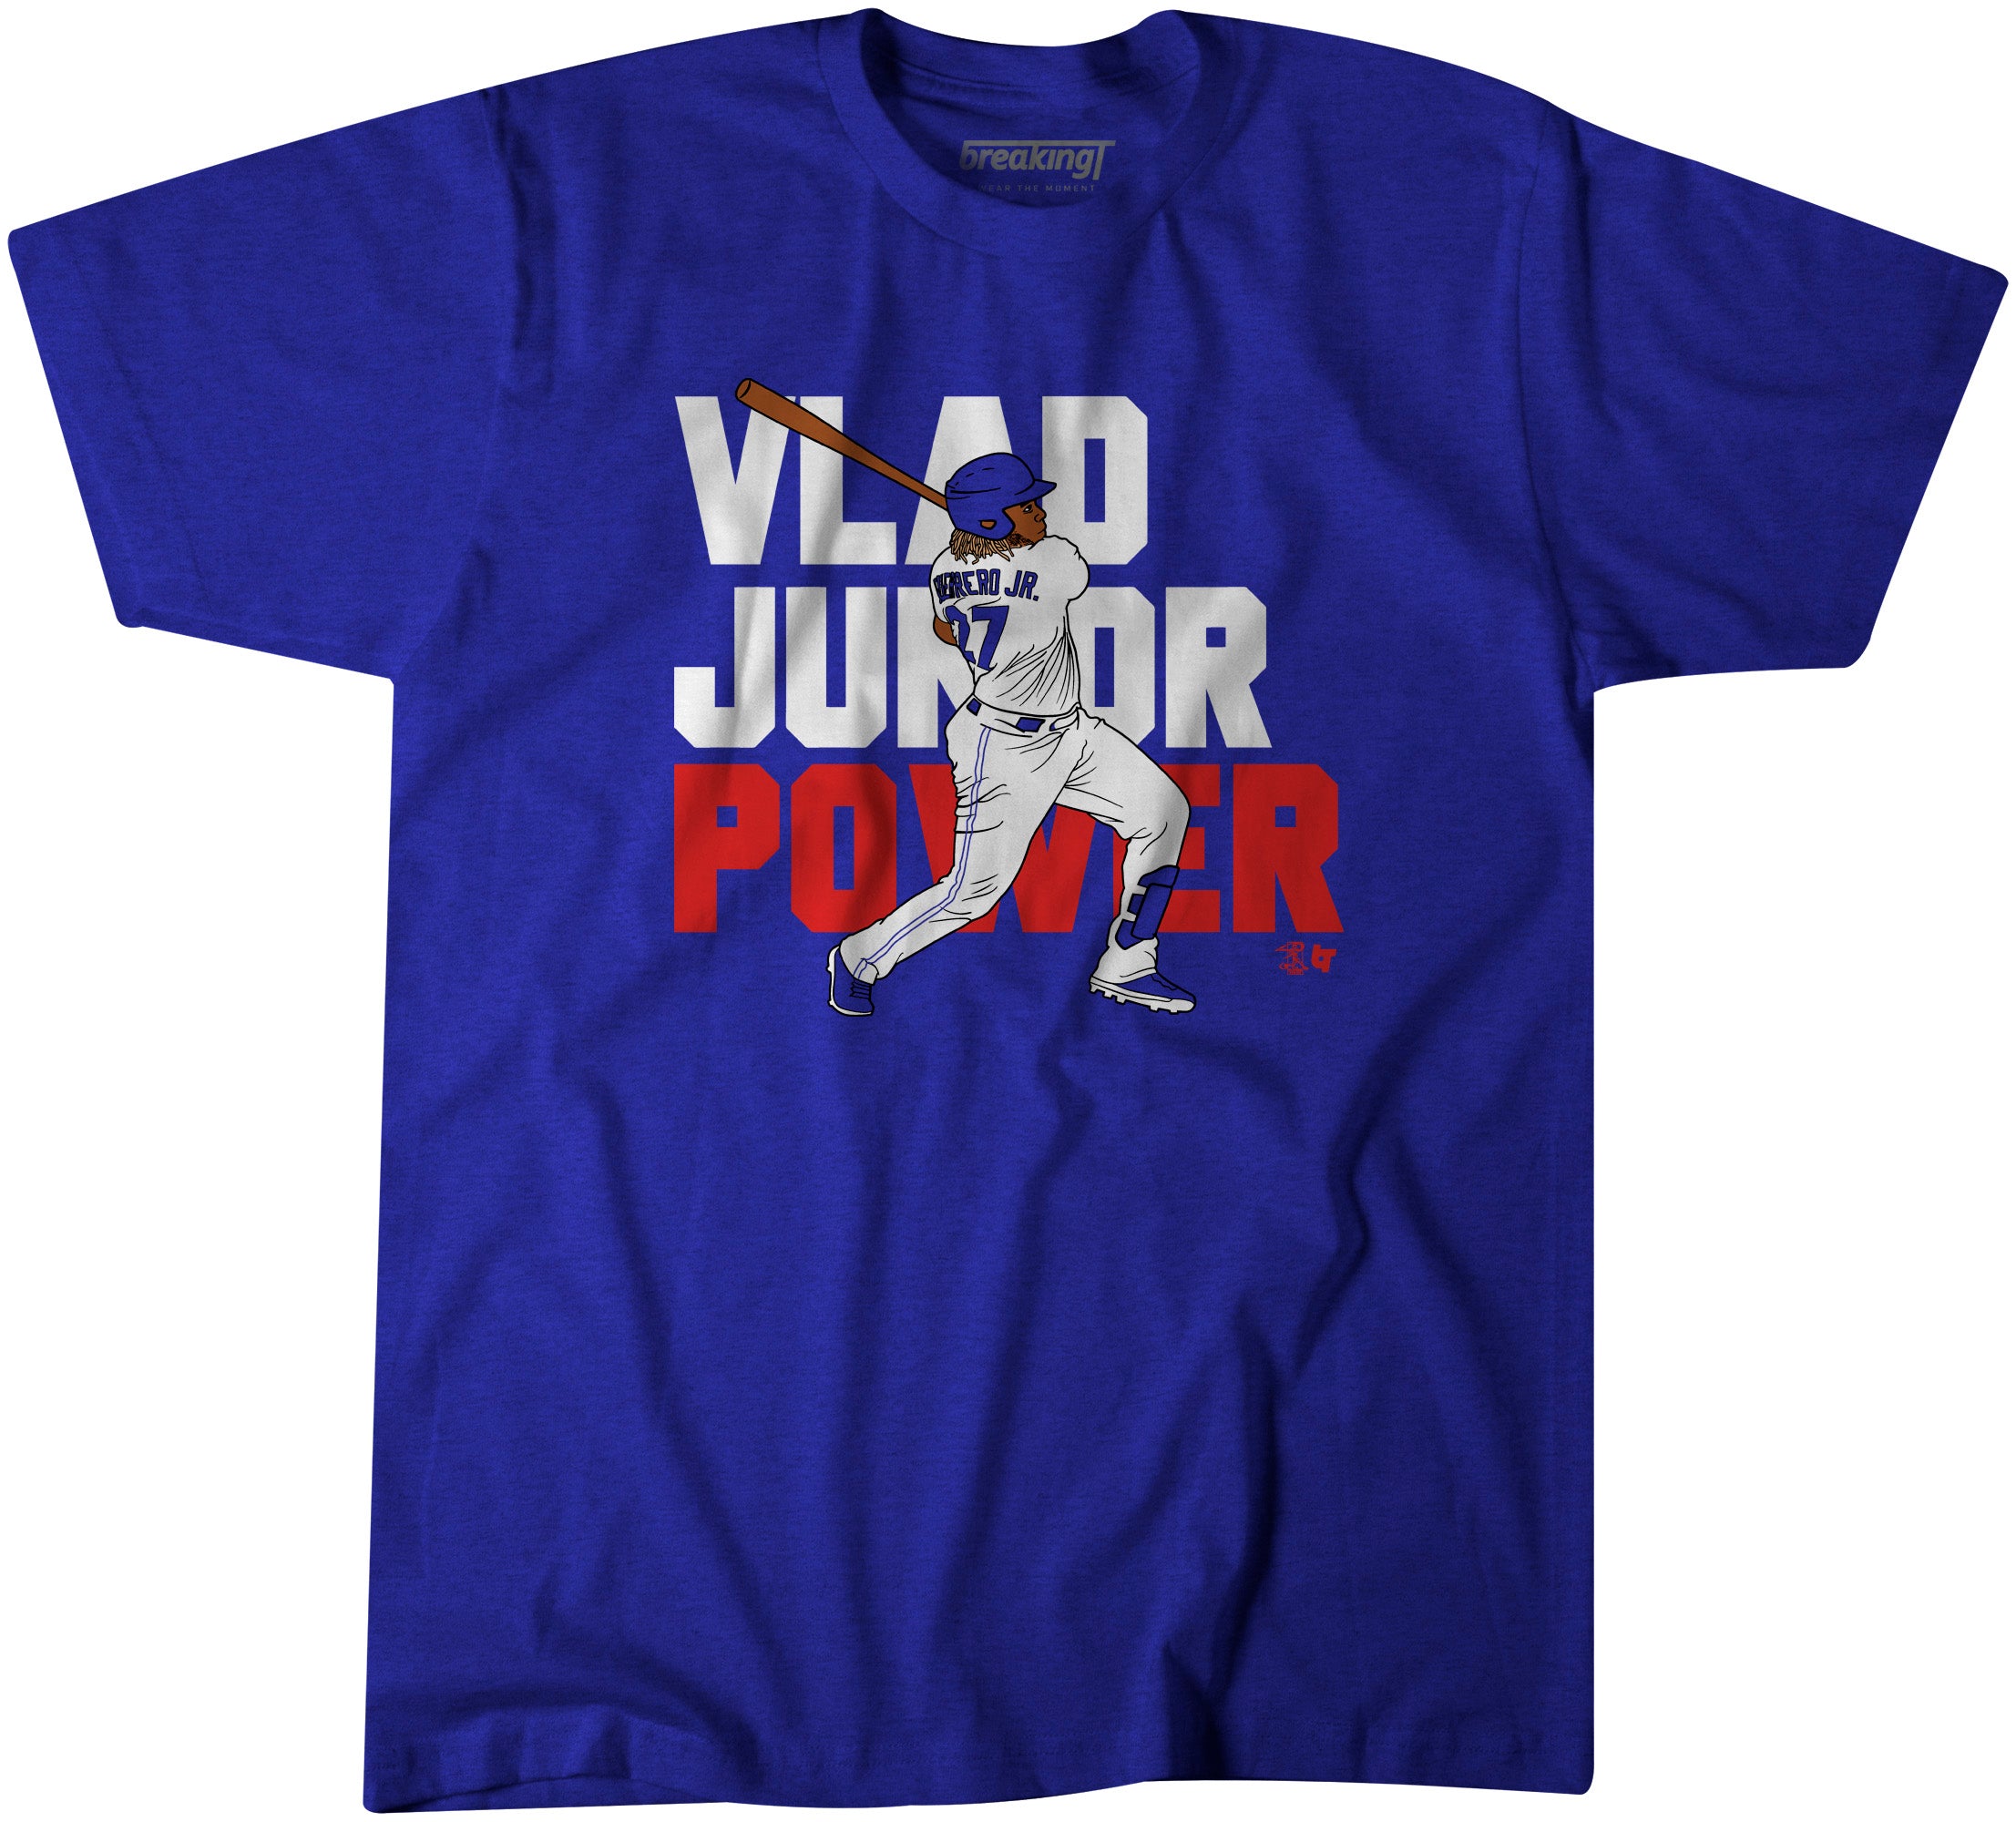 Vlad Guerrero Jr. Shirt, Vlad Junior Power - BreakingT